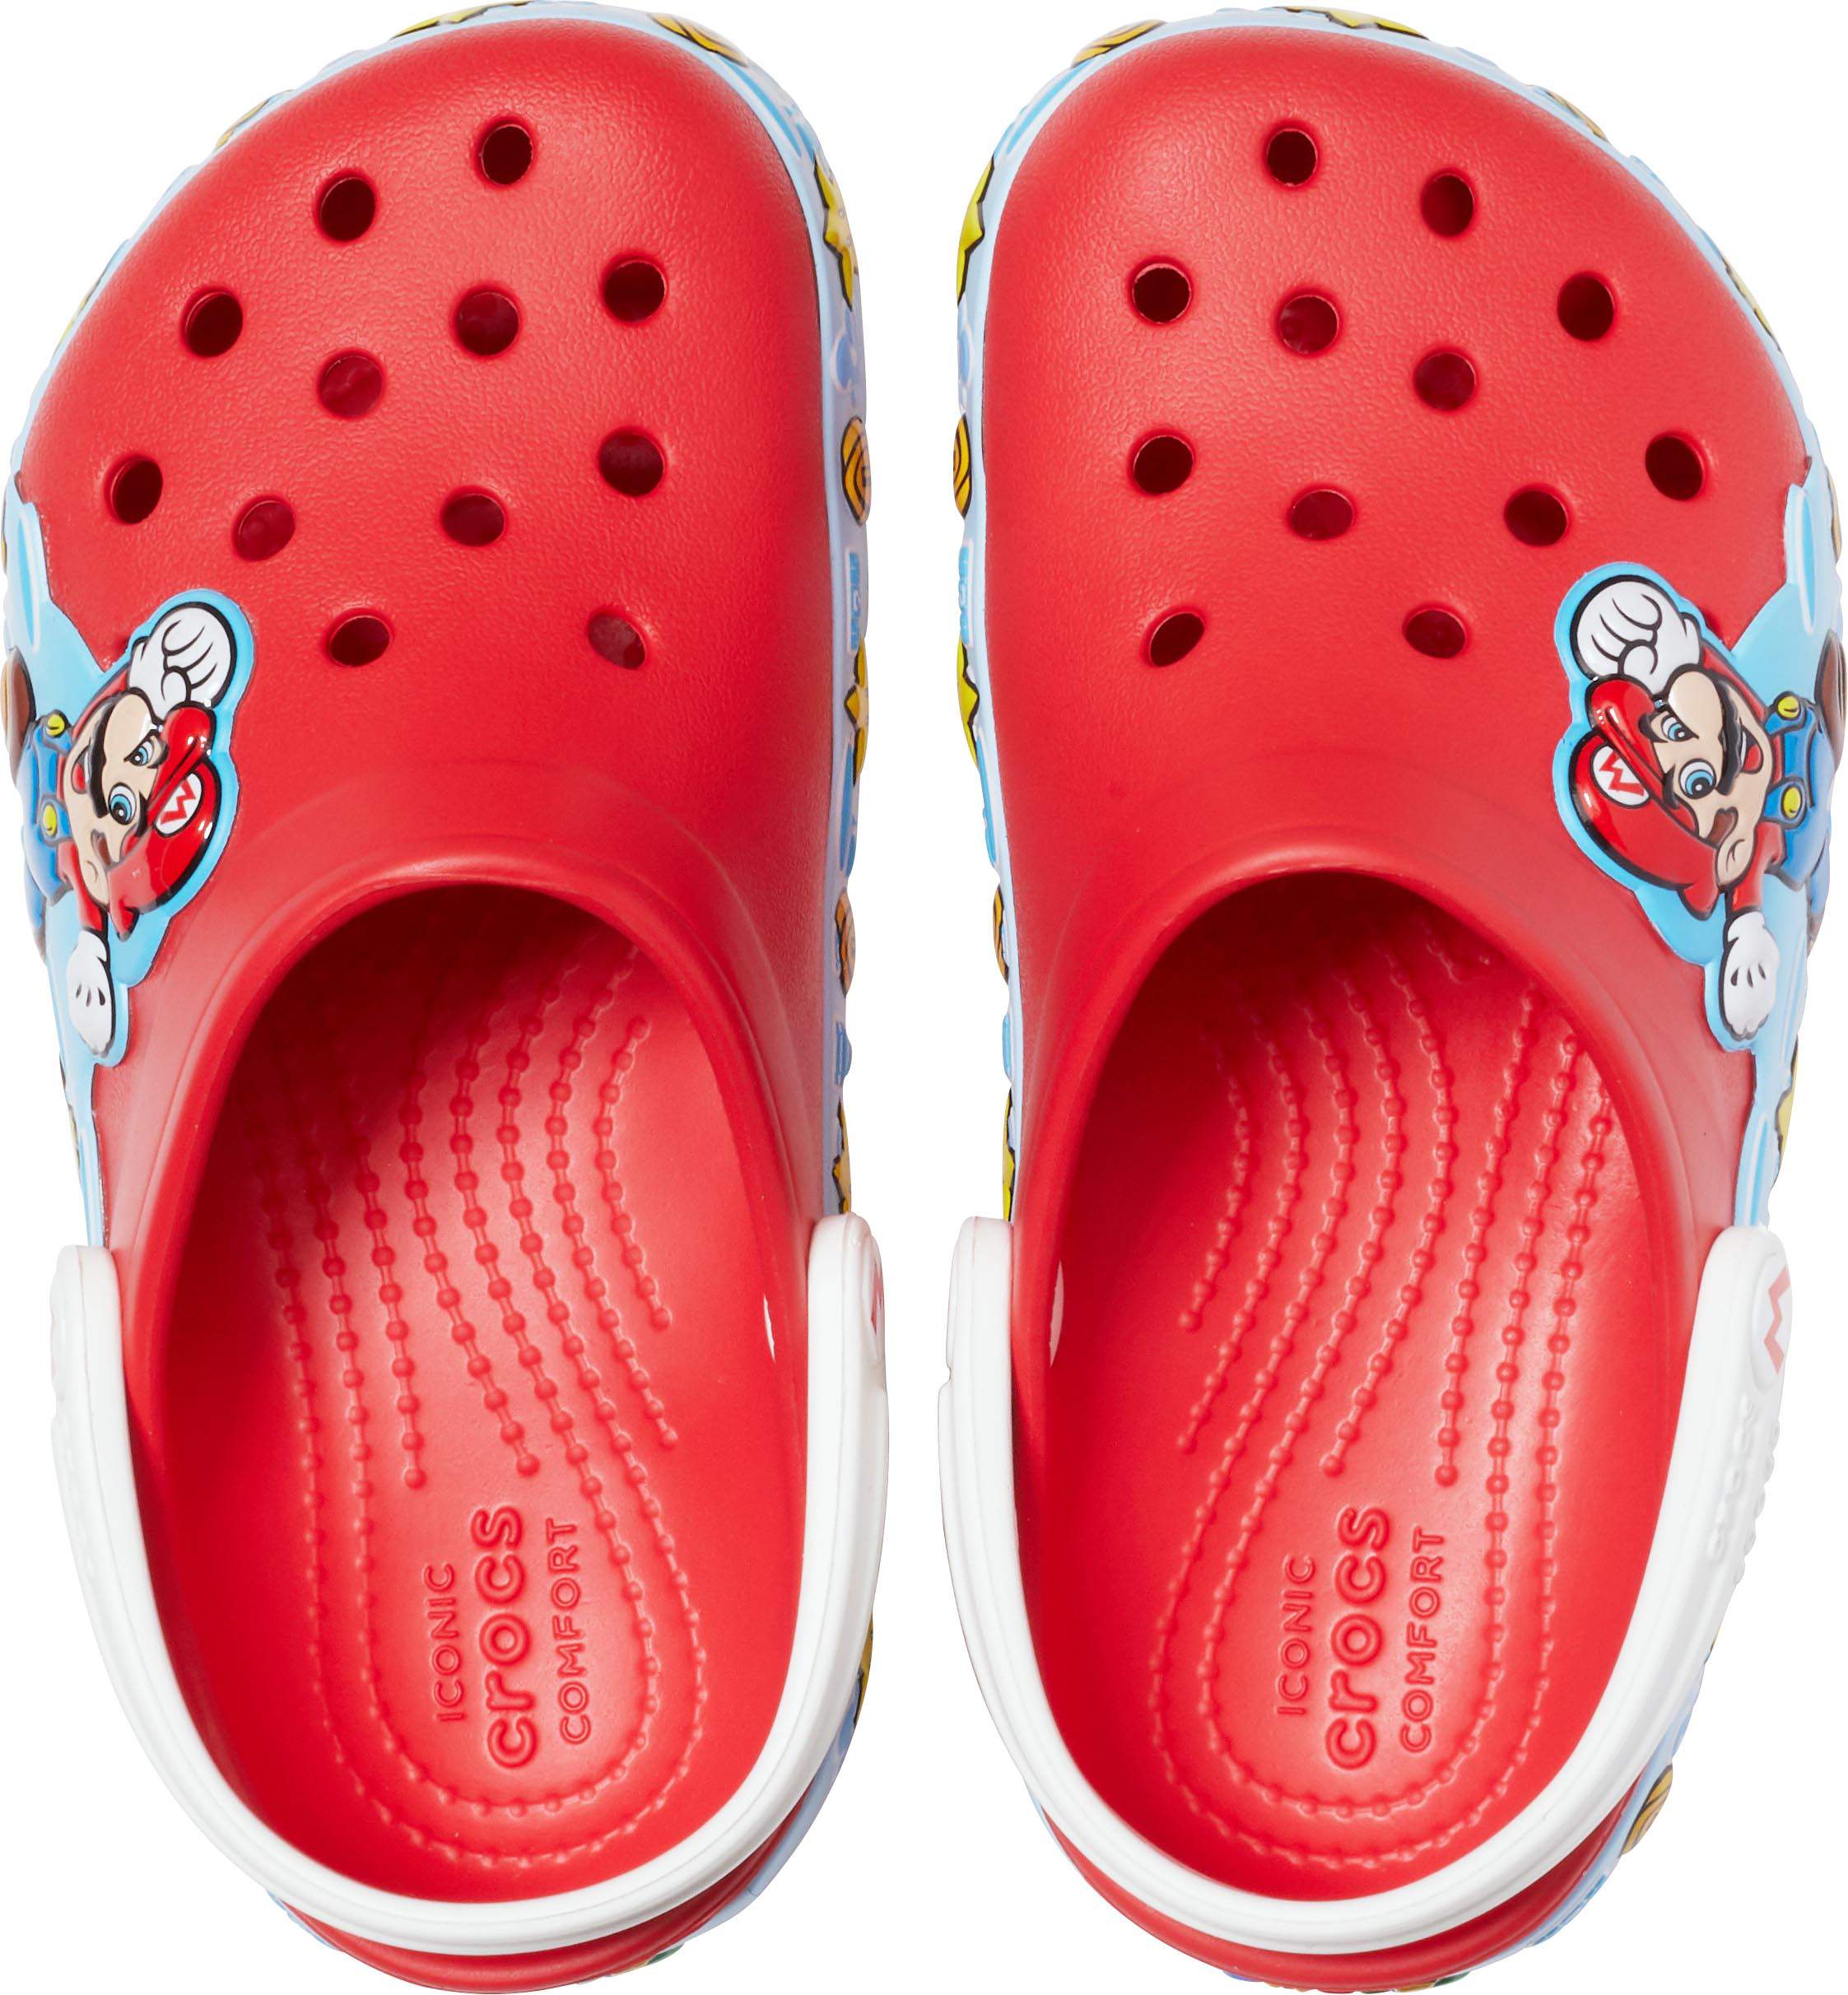 crocs shoes red